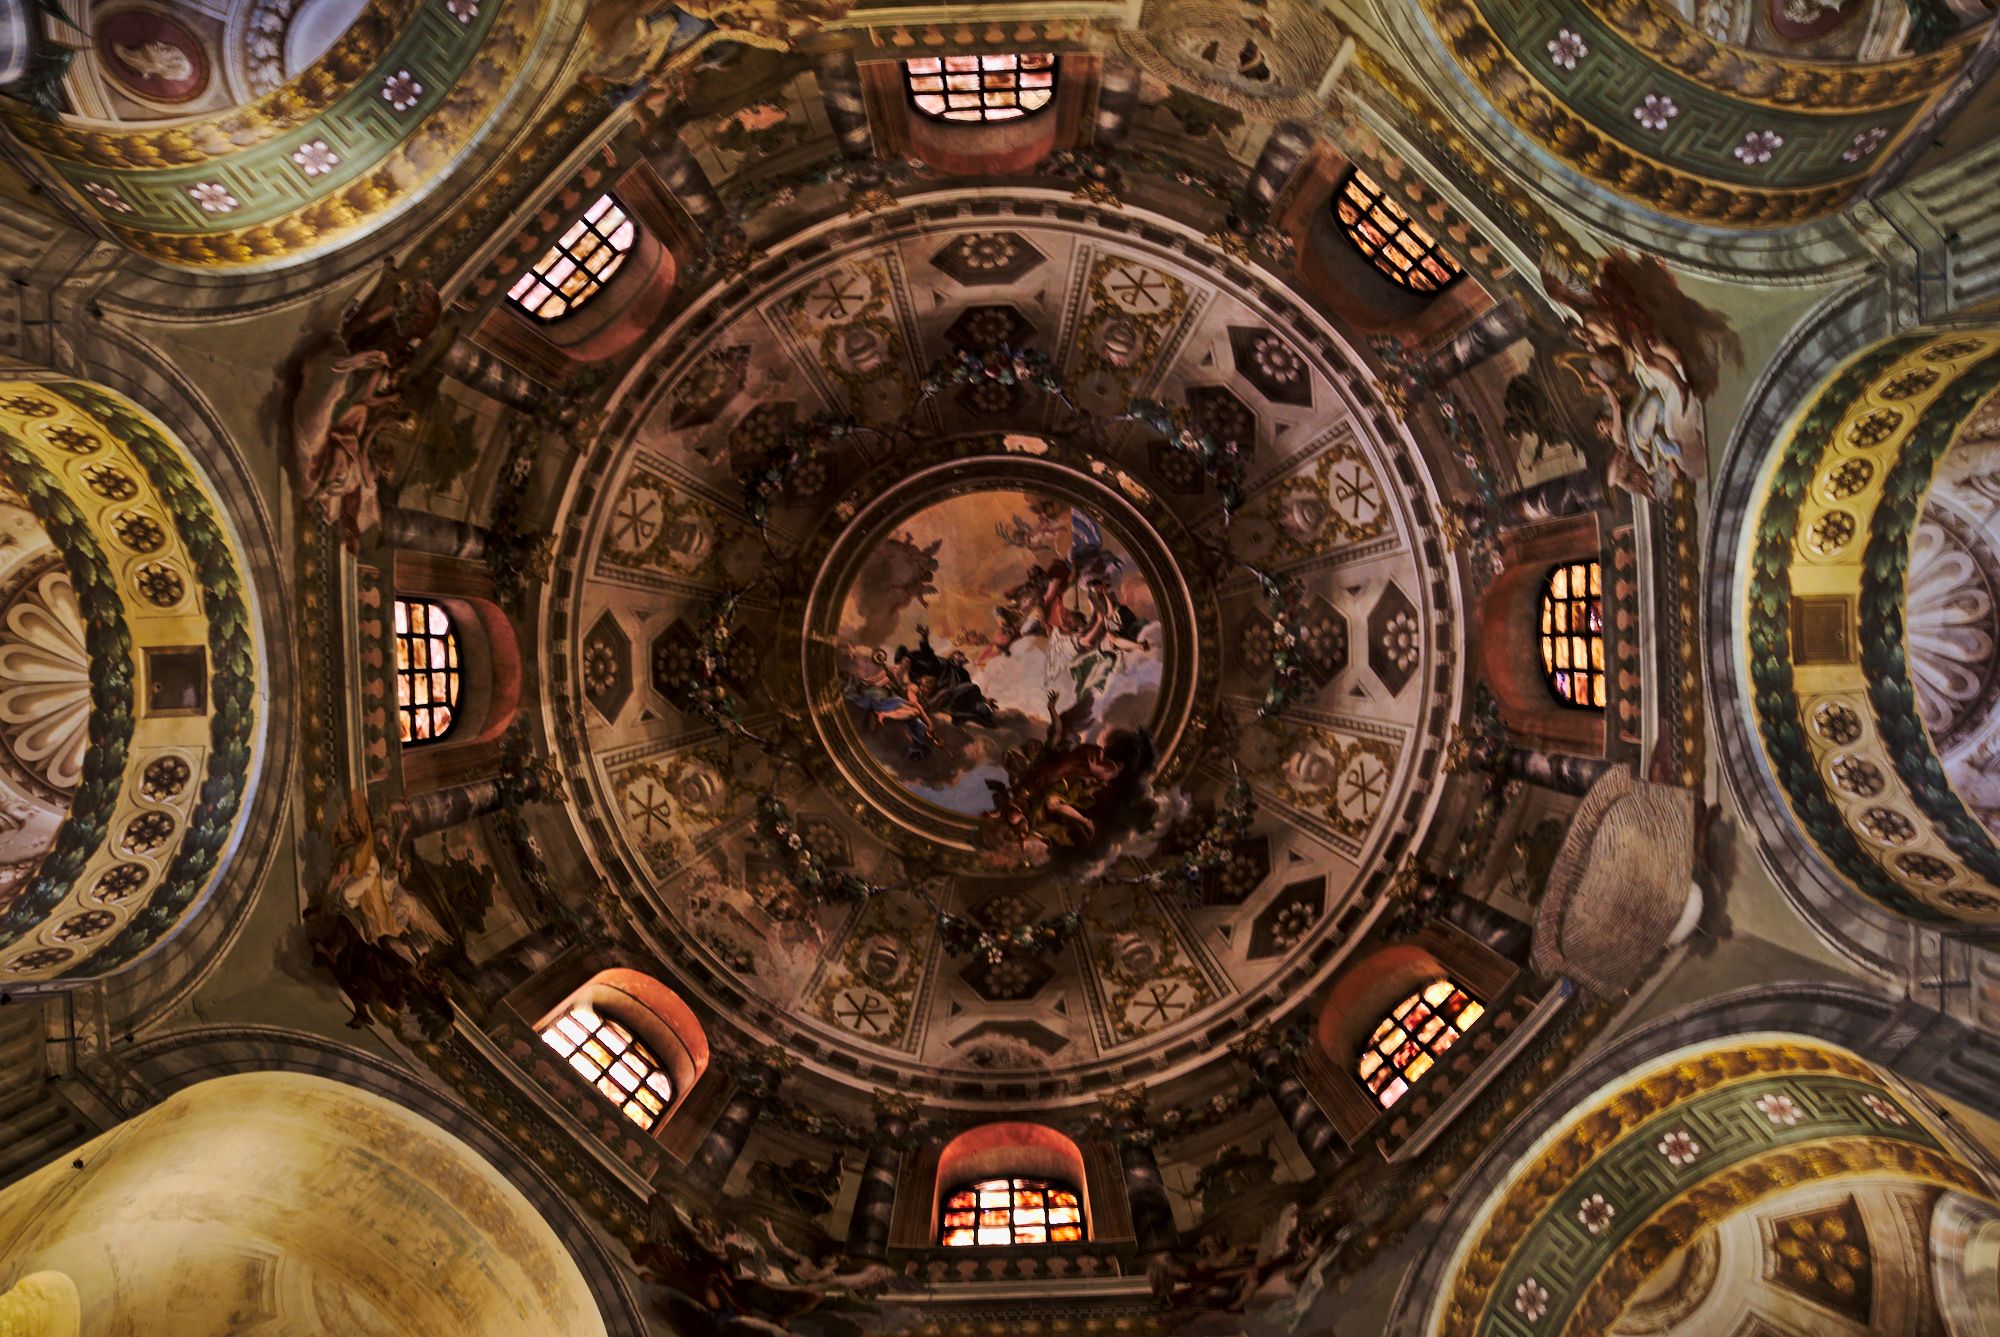 Basilica di San Vitale in Ravenna